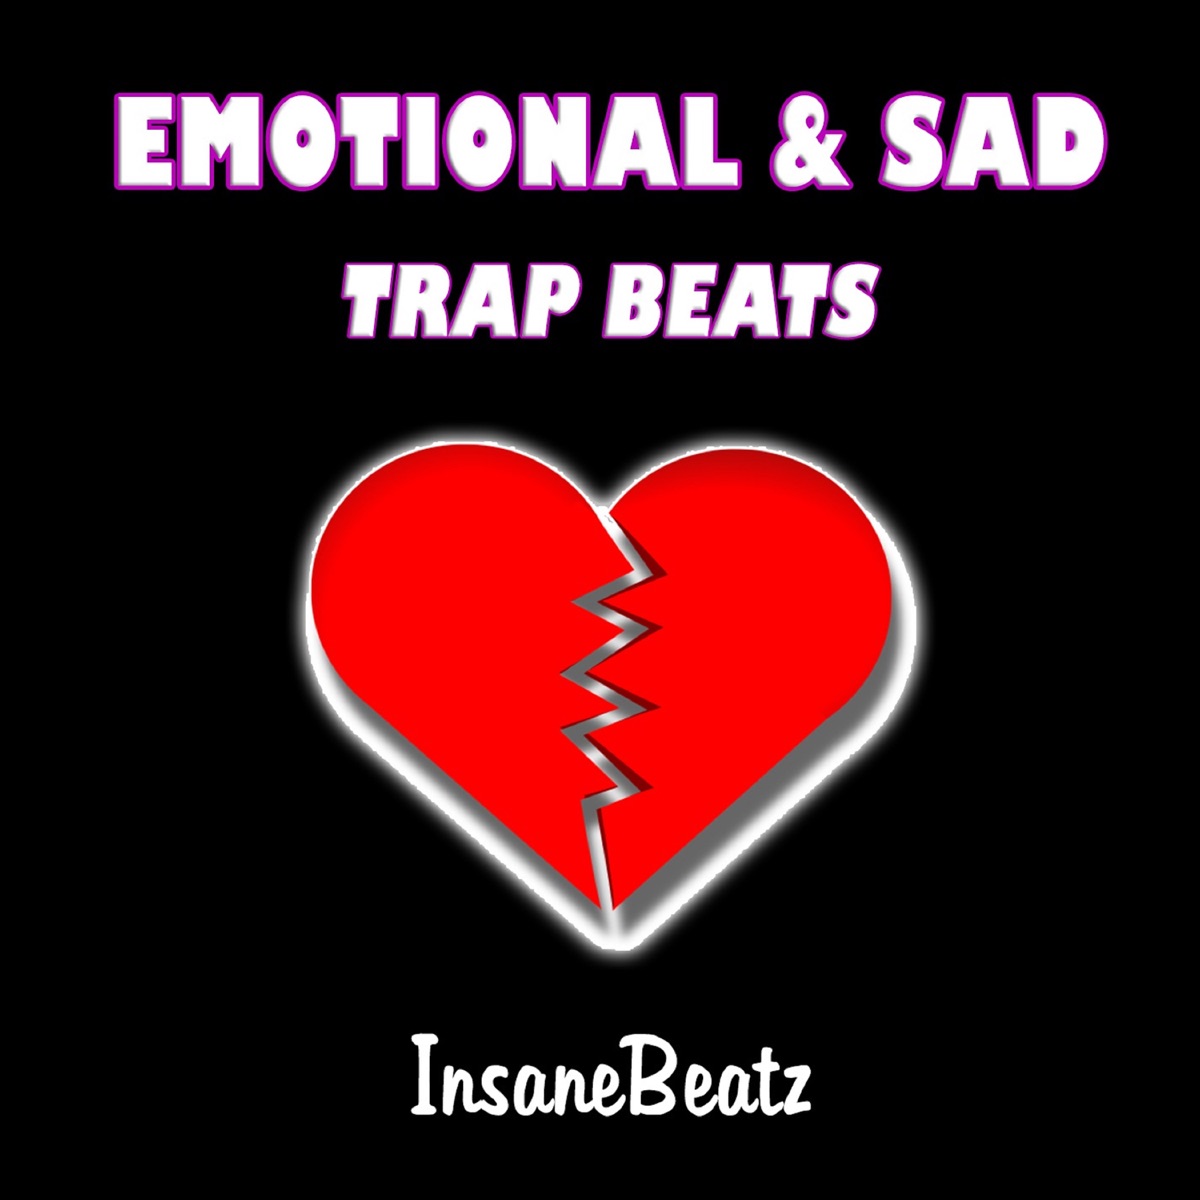 Emotional & Sad Trap Beats by InsaneBeatz on Apple Music